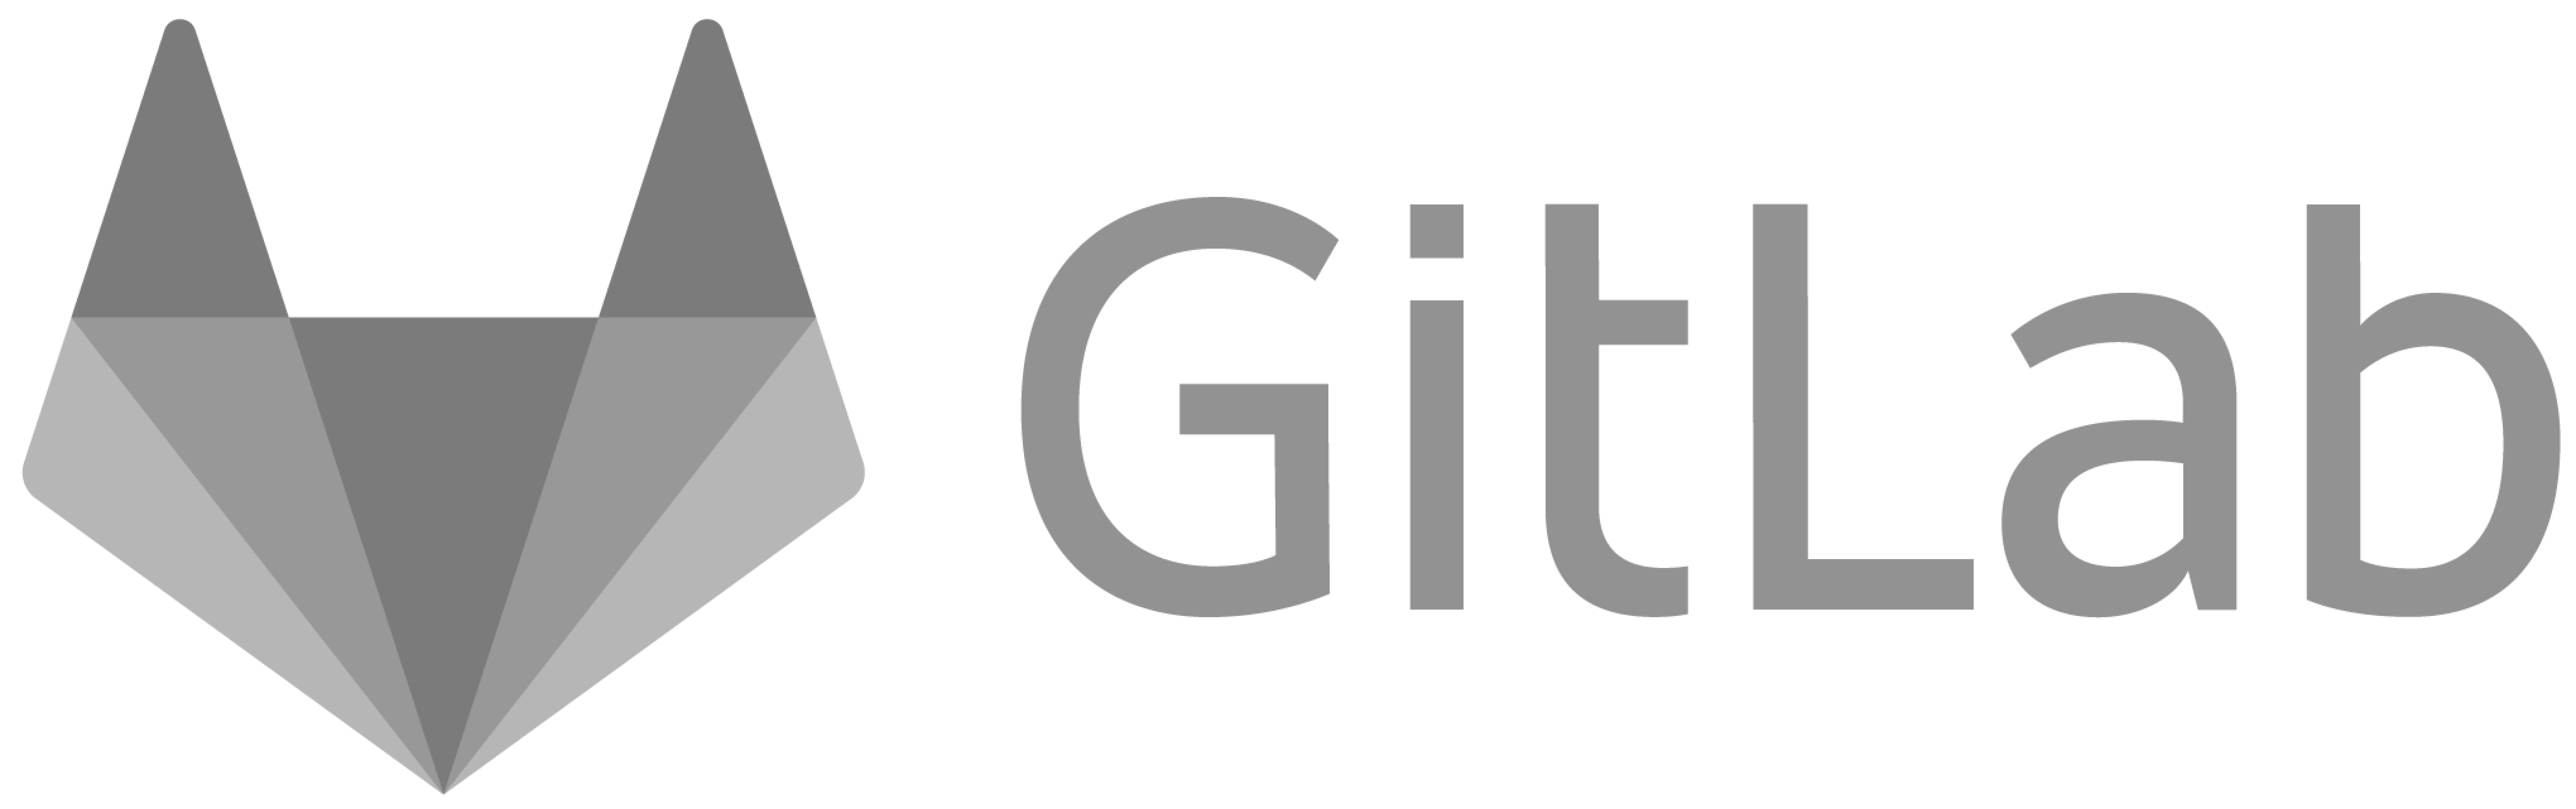 gitlab logo gray color